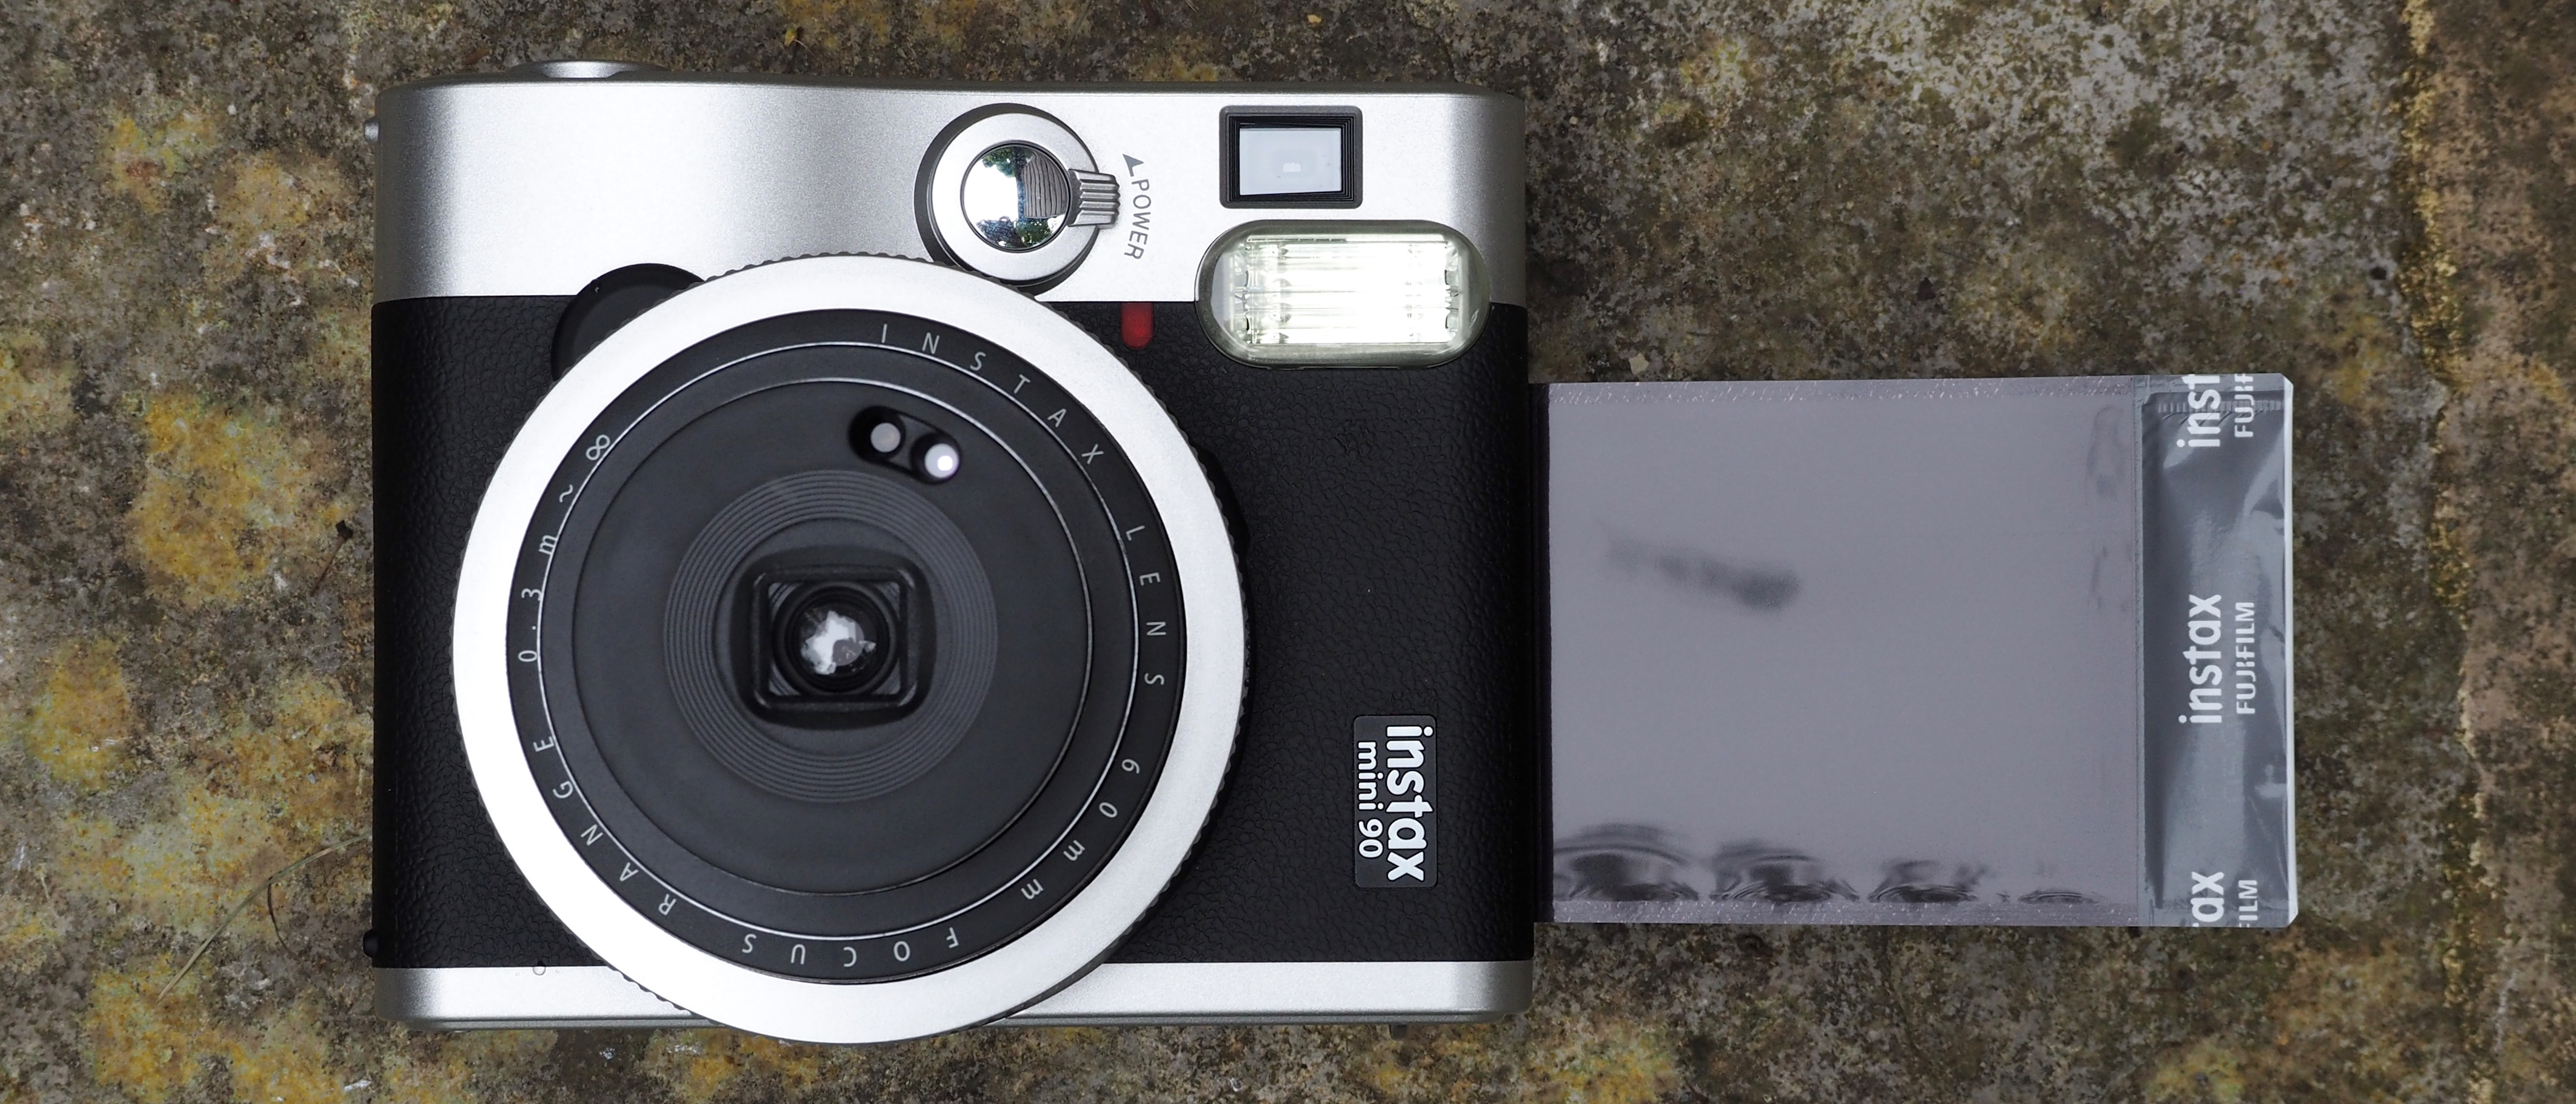 Fujifilm Instax Mini 90 Neo Classic review | Digital Camera World